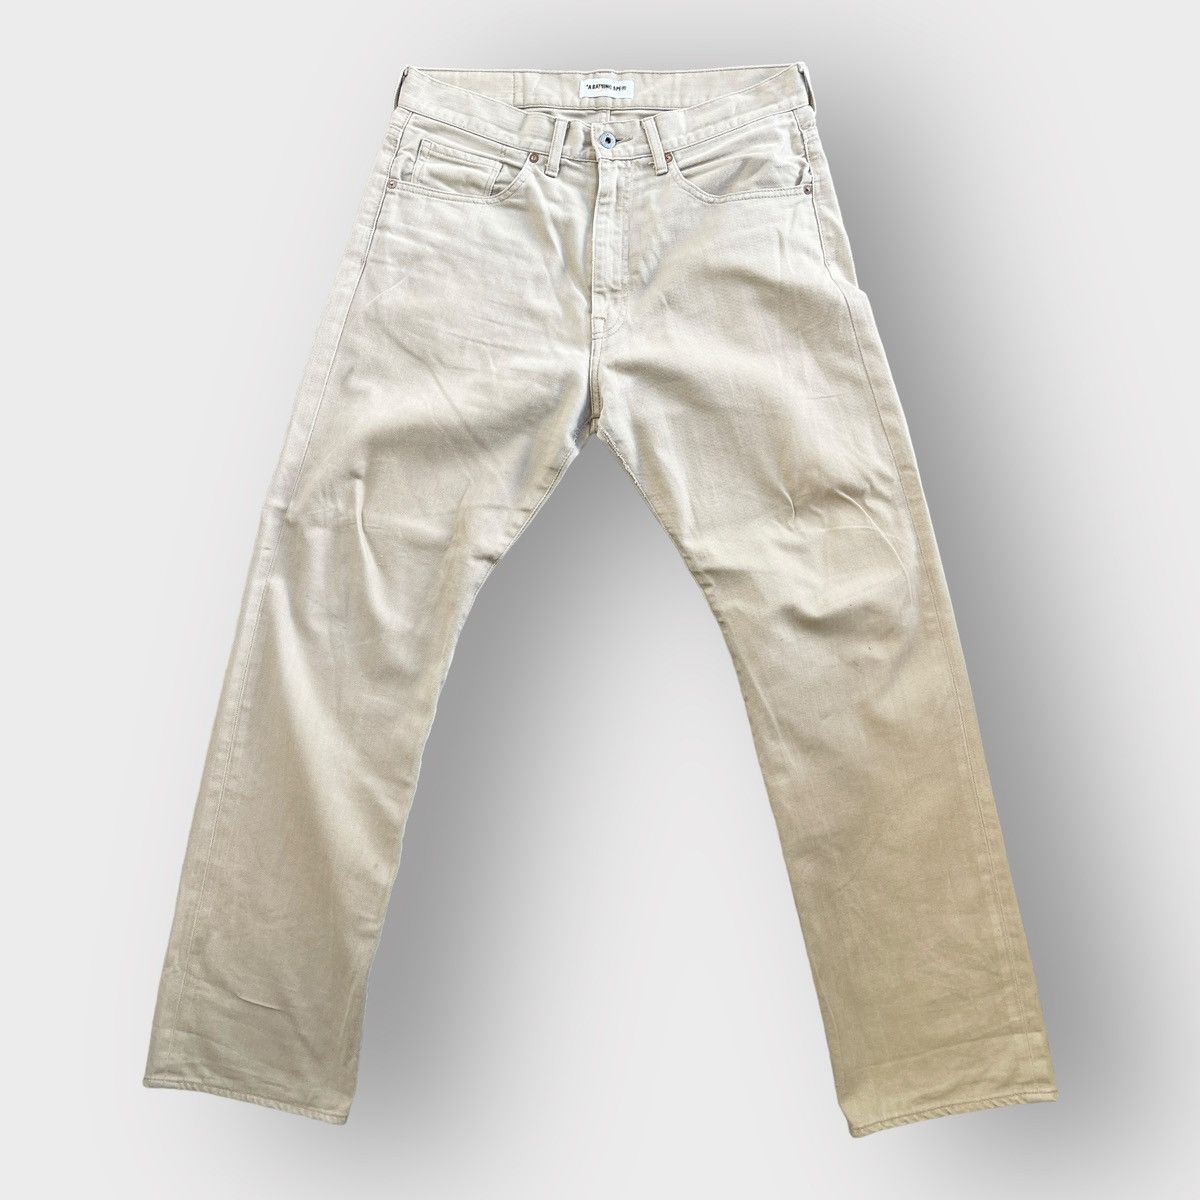 Bape Archival Logos Khaki Jeans - 10